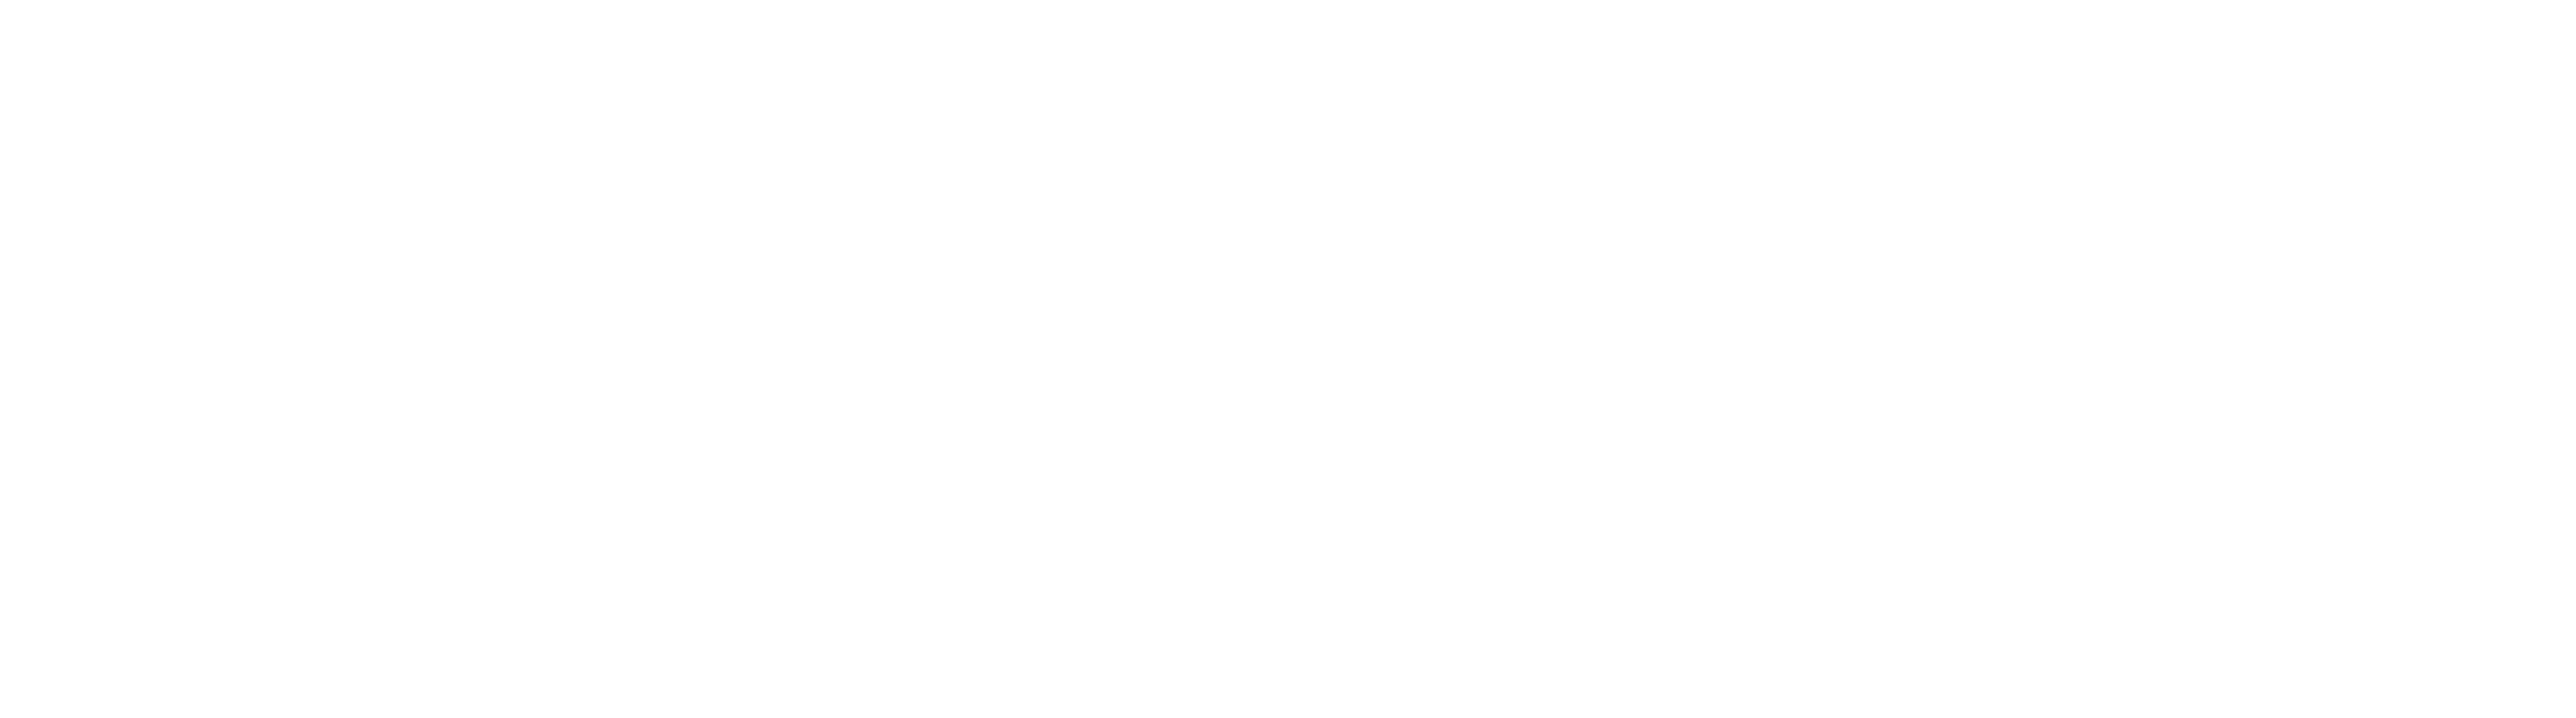 Archer Marine Services Shop